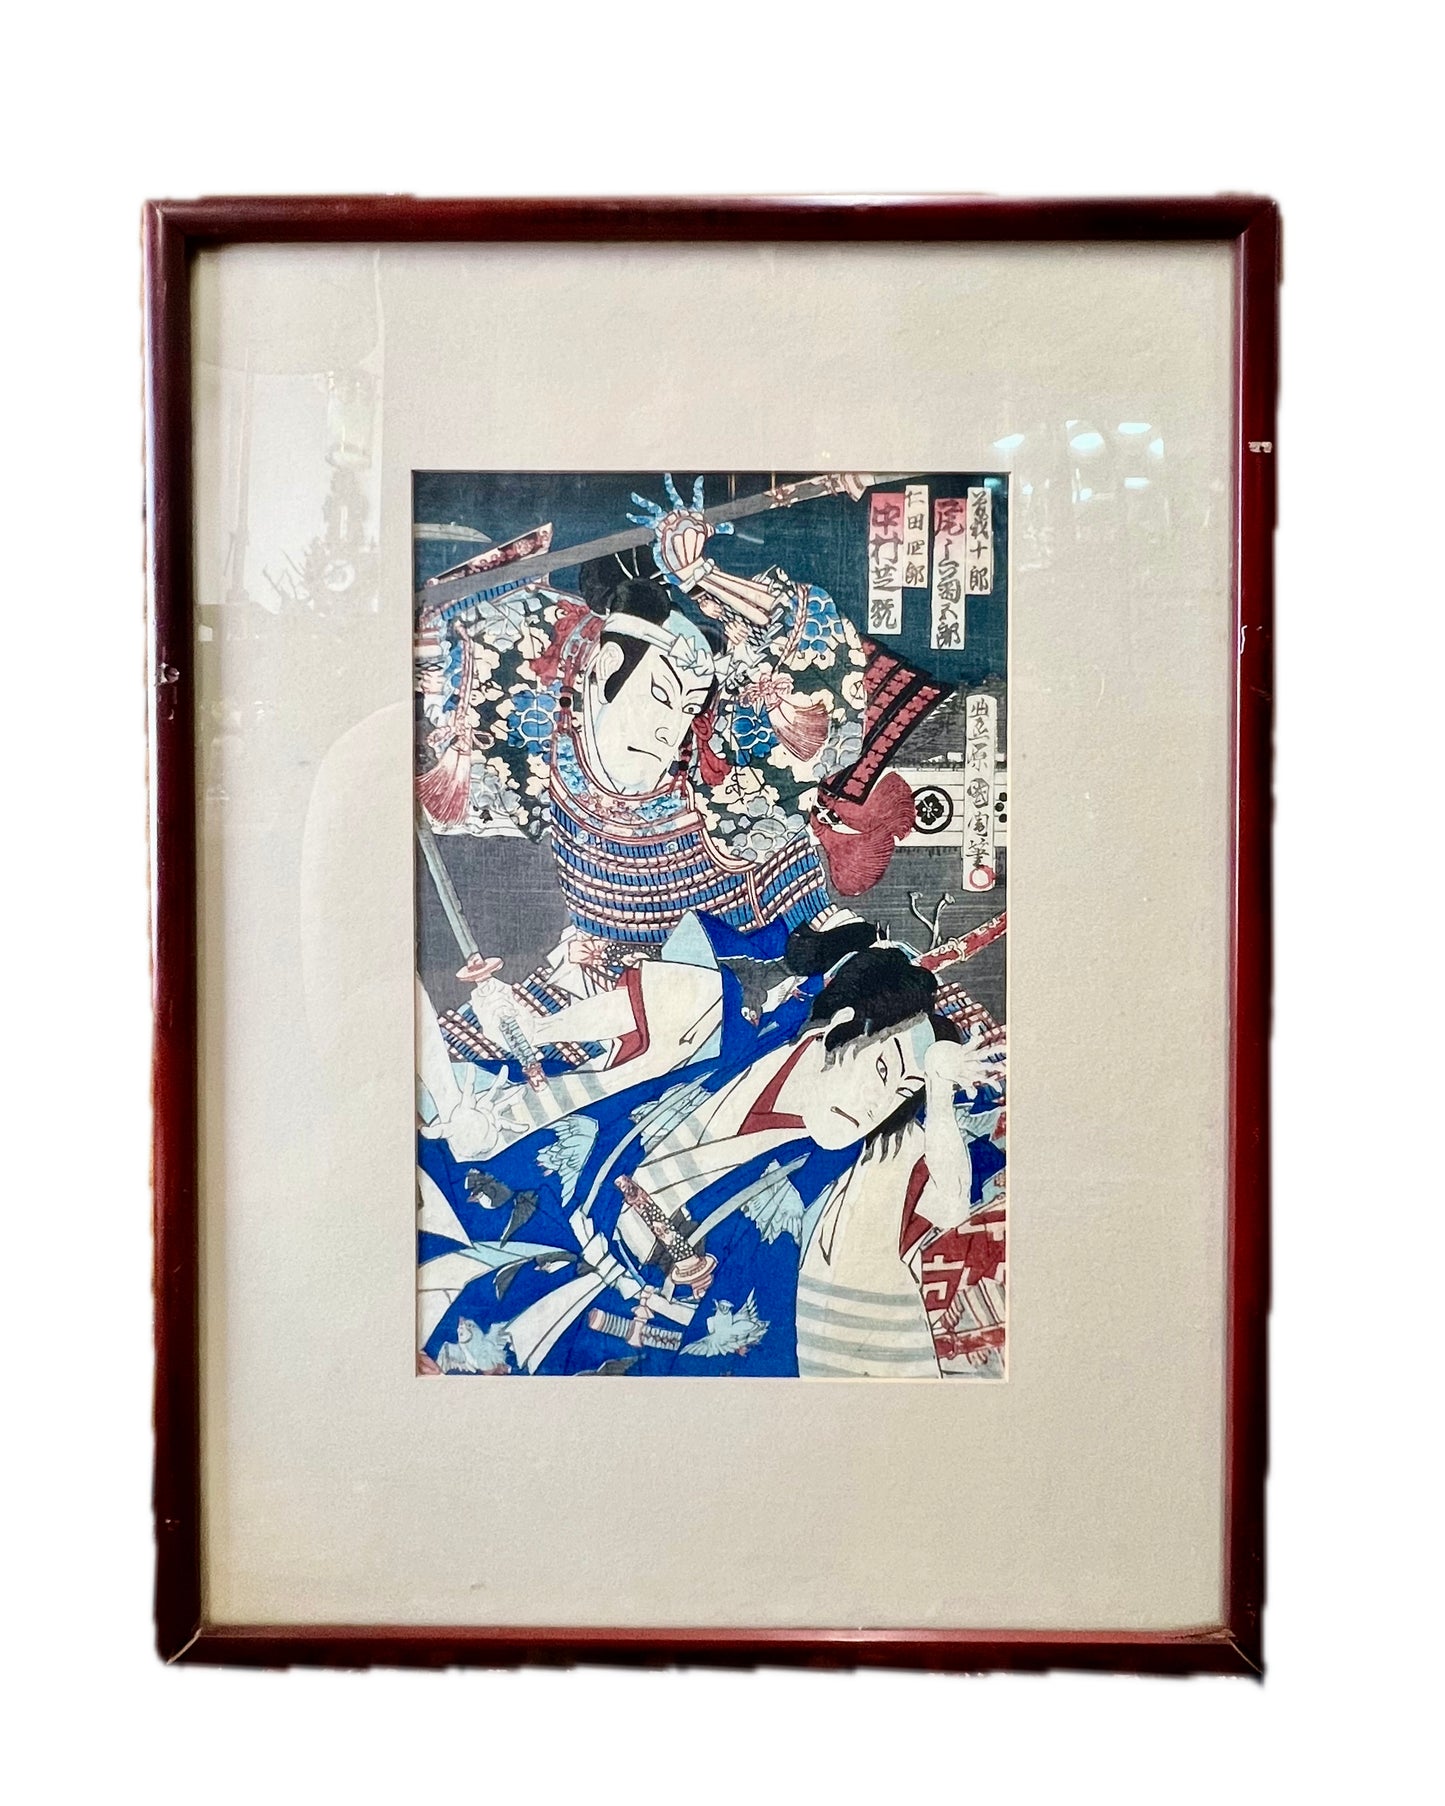 Meiji Period uchiwa-e woodblock print, Toyohara Kunichika